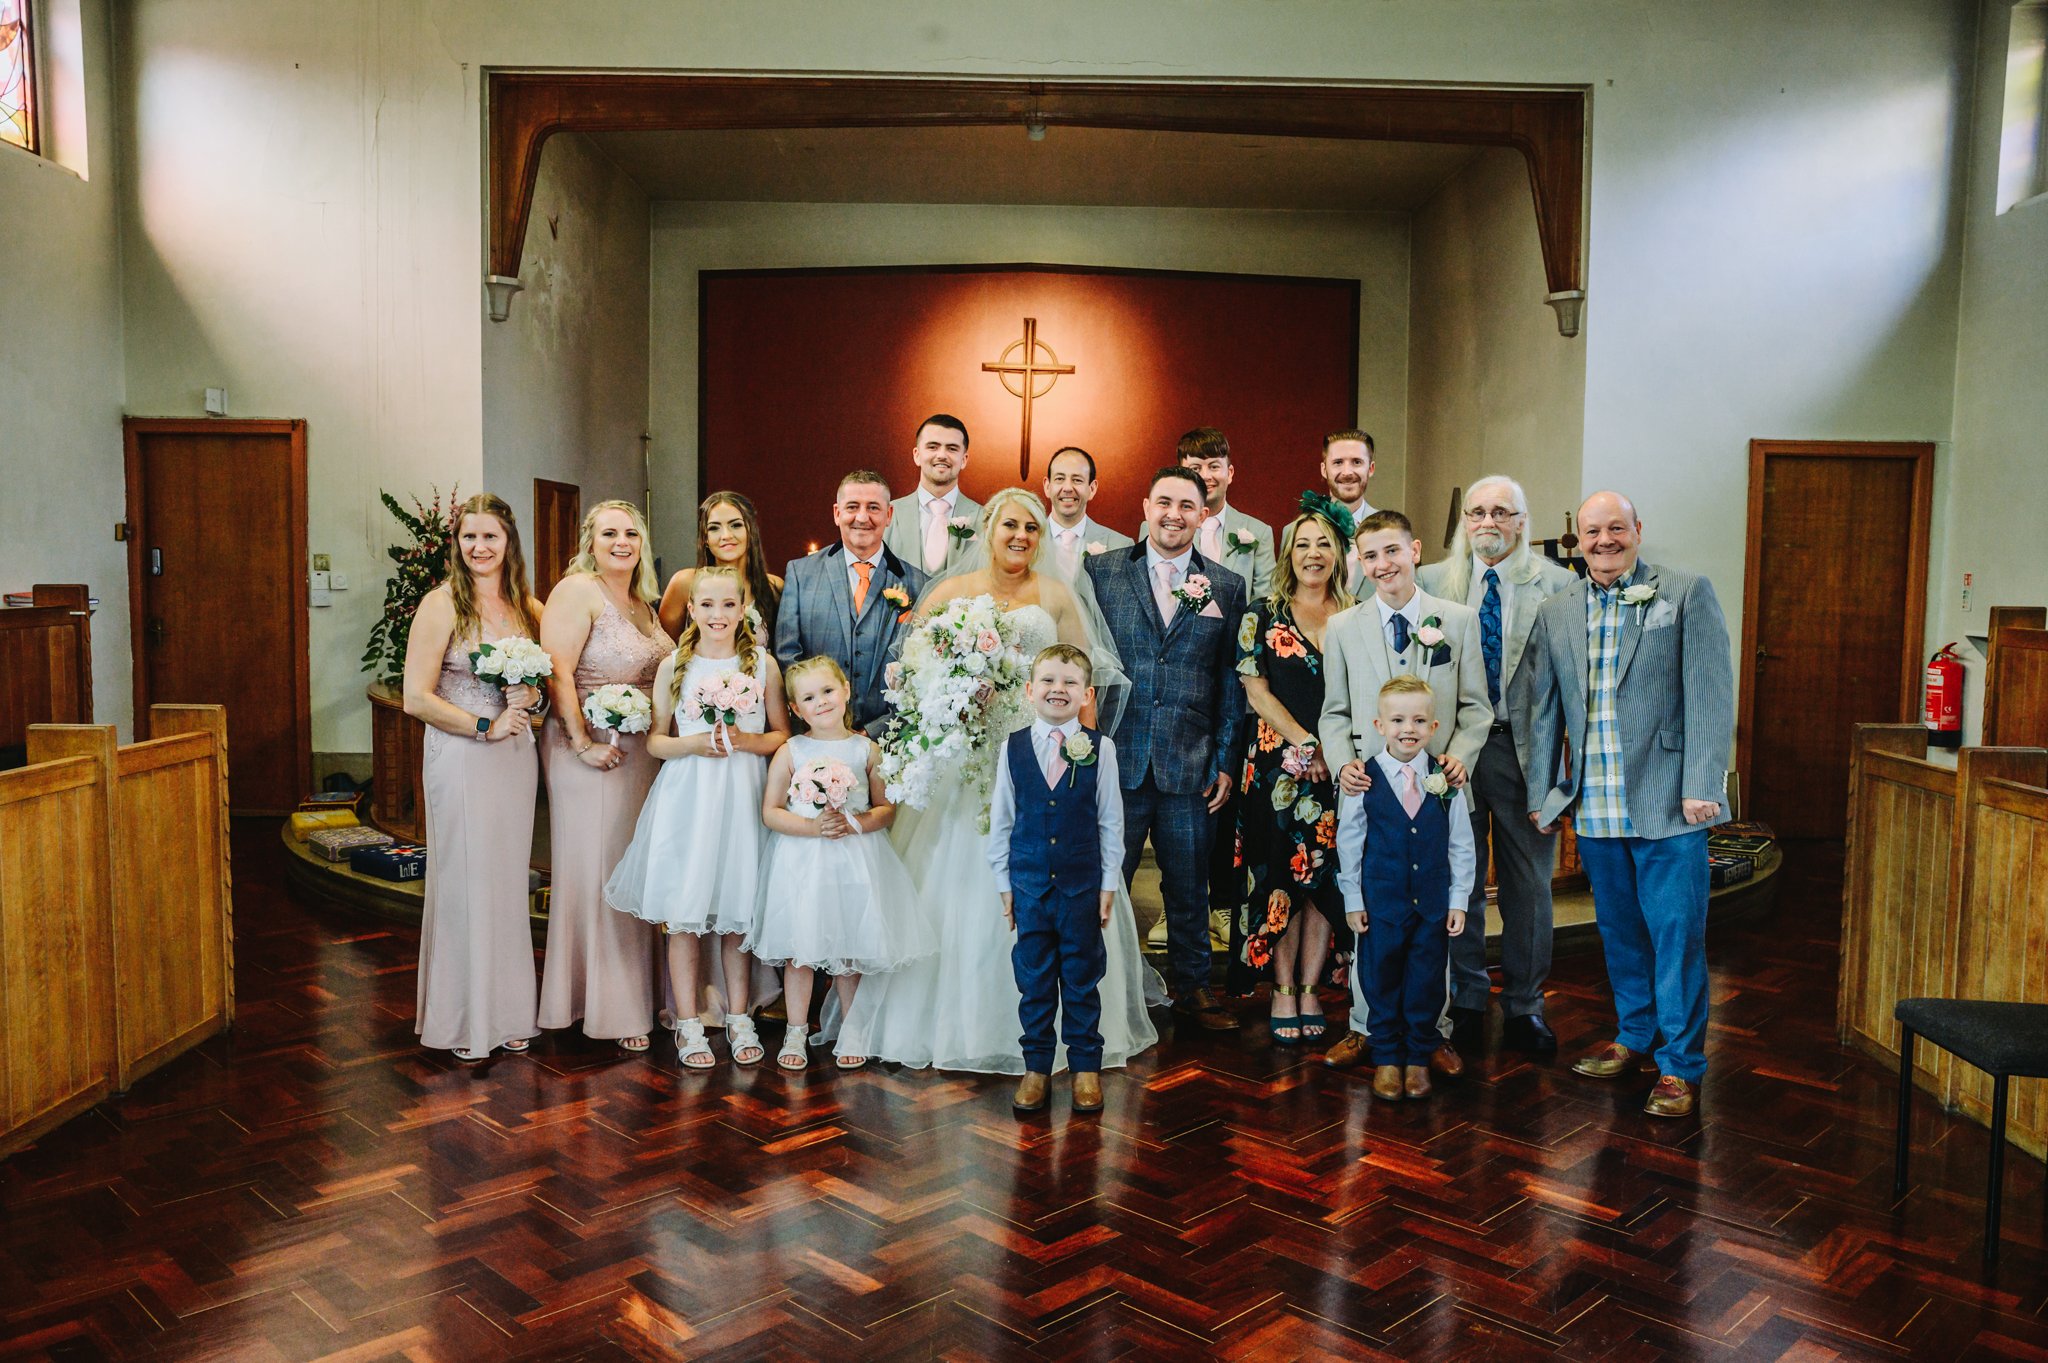 Saint-Clares-Church-Newton-Aycliffe-wedding-photograper (6 of 13).jpg